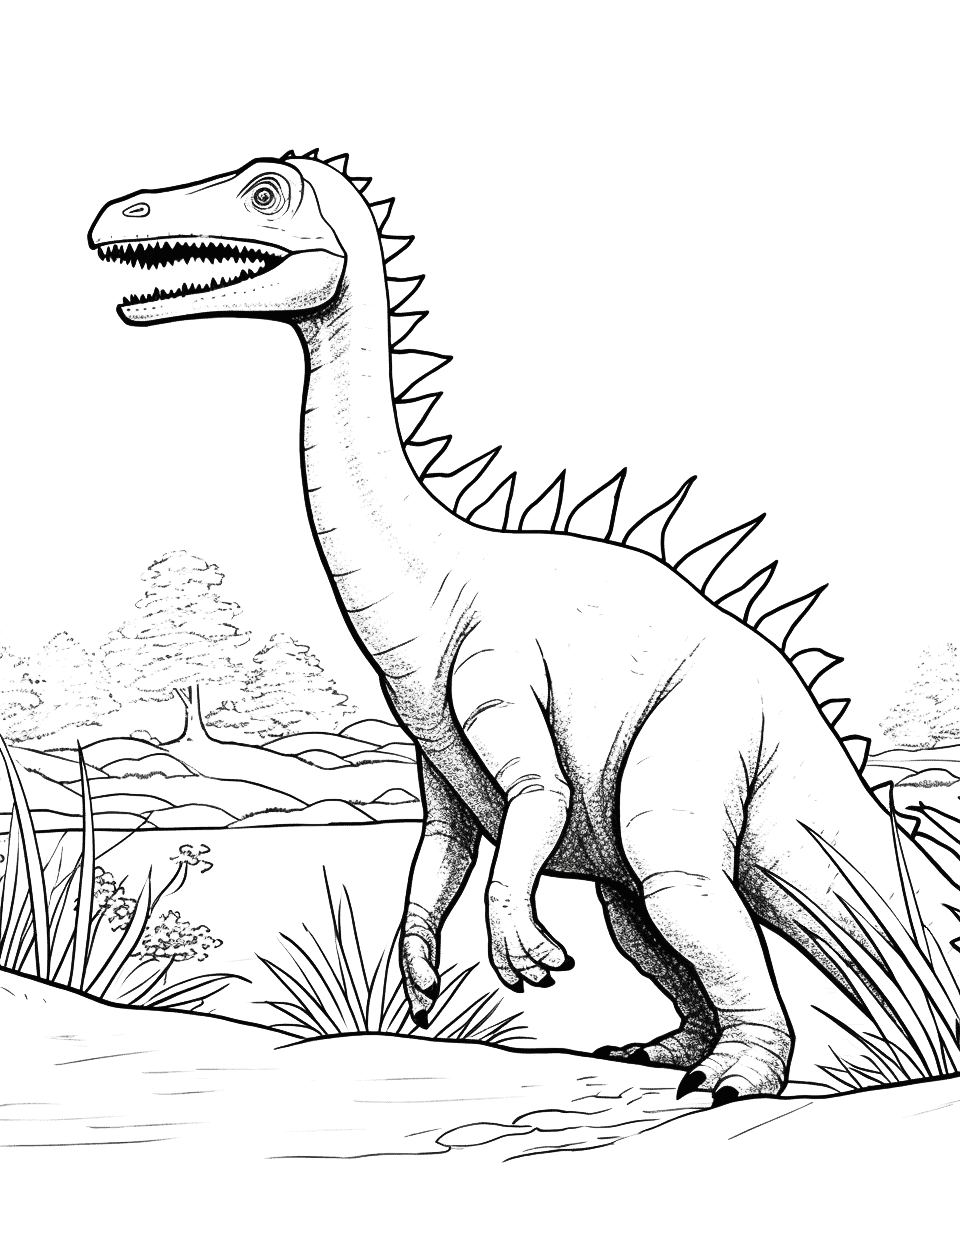 Realistic Spinosaurus Dinosaur Coloring Page - A detailed, realistic Spinosaurus prowling near a prehistoric river.